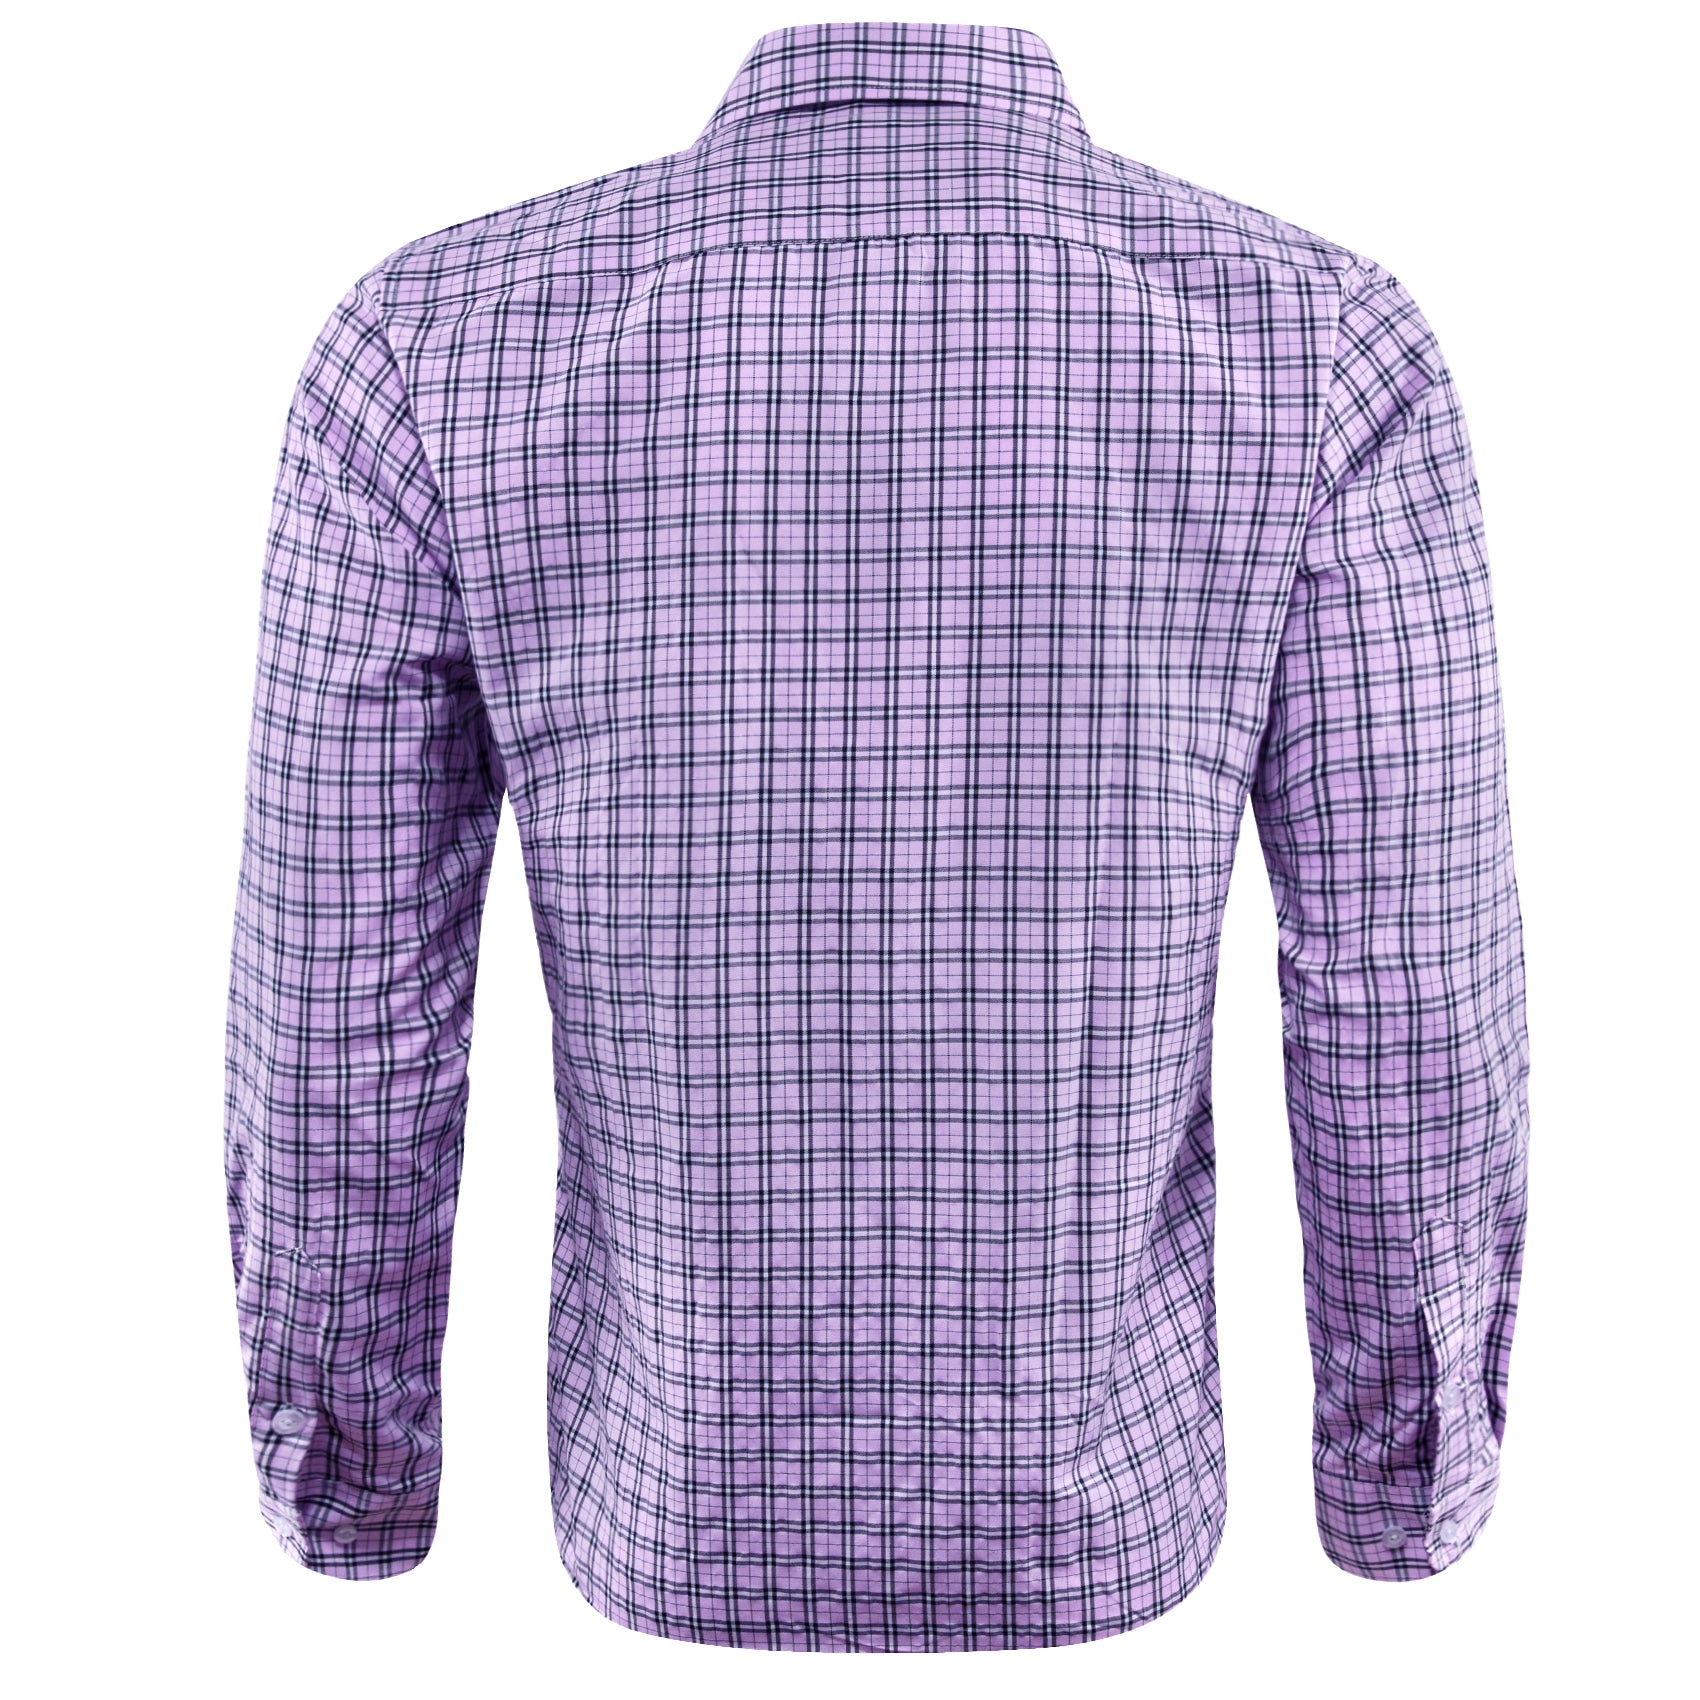 Barry.wang Purple Plaid Men's Shirt